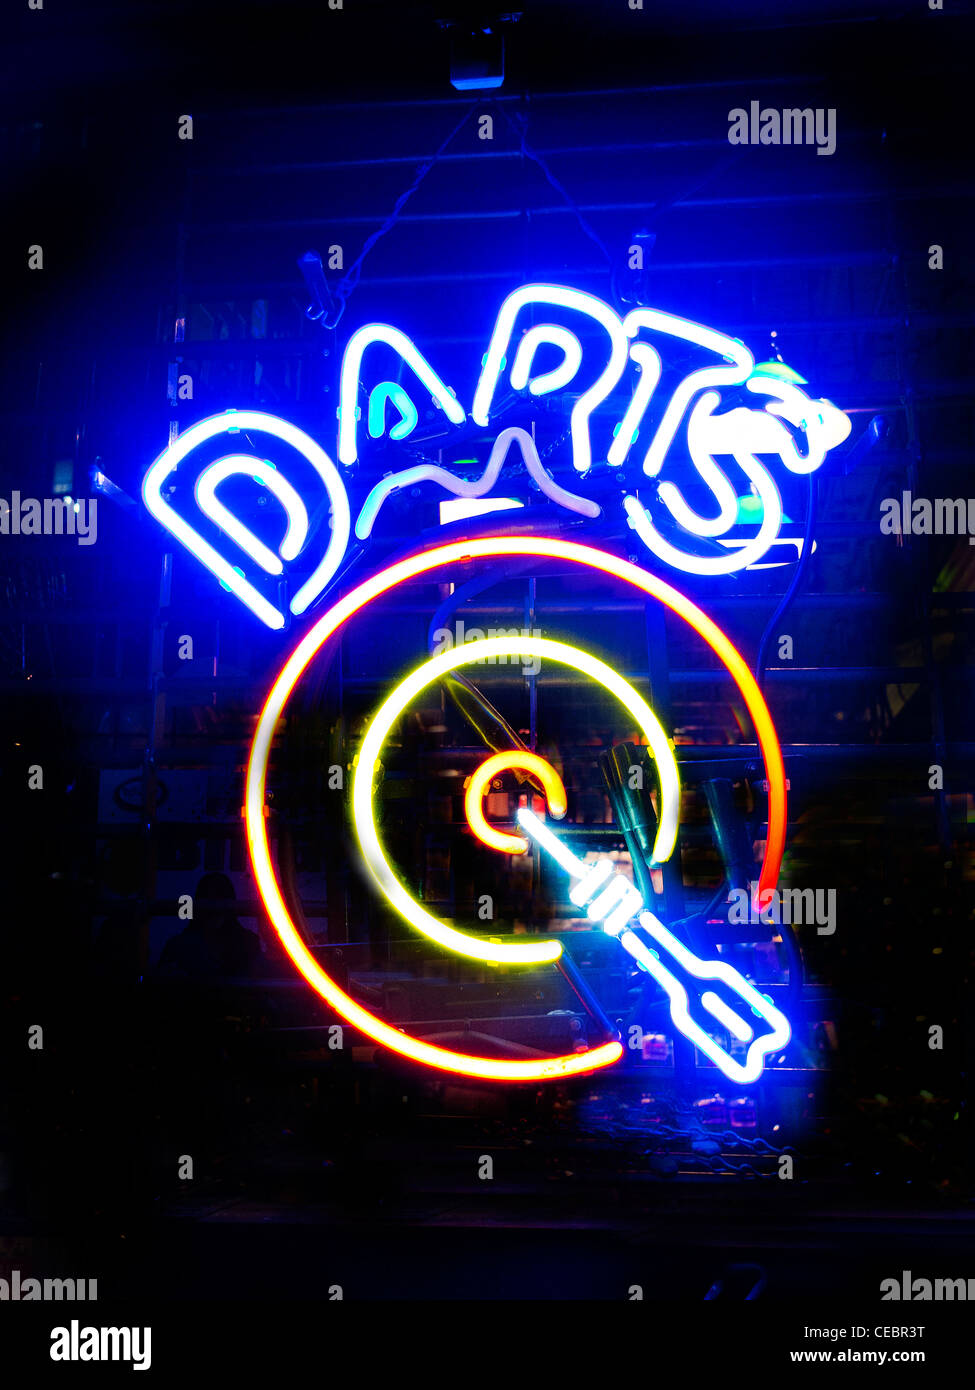 darts neon game sign Stock Photo - Alamy